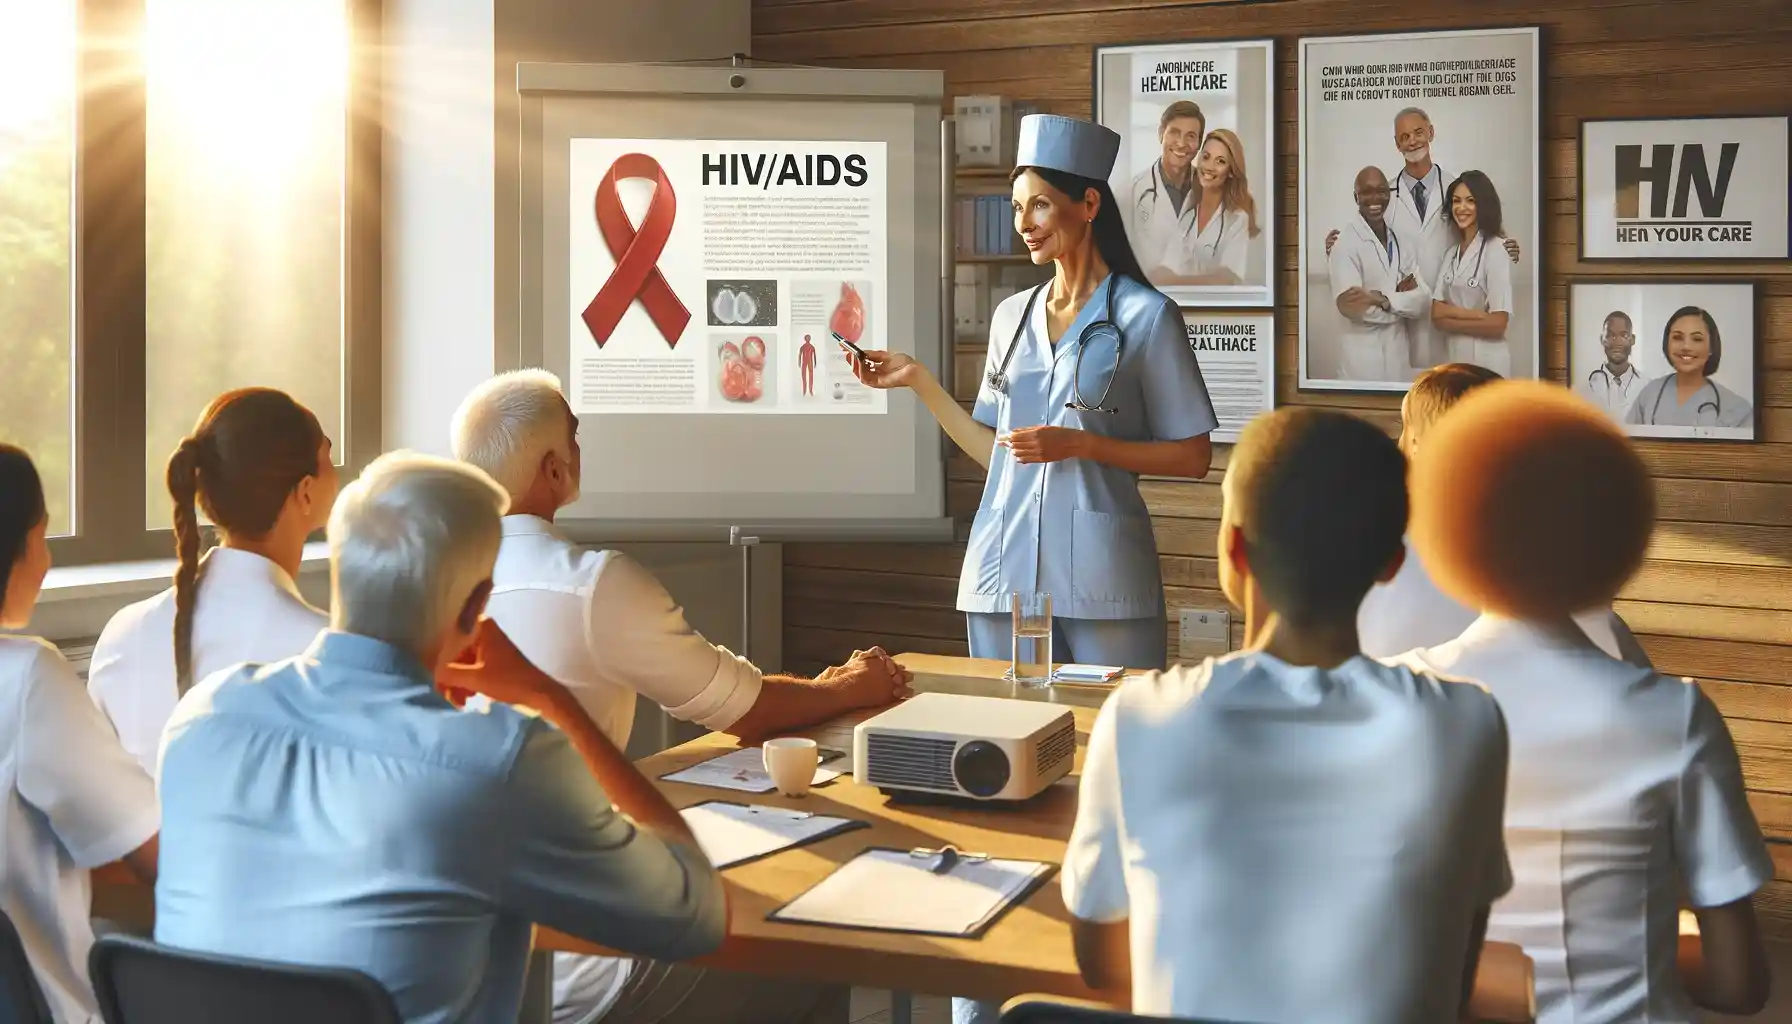 Florida HIV/AIDS Training for Healthcare Professionals course description